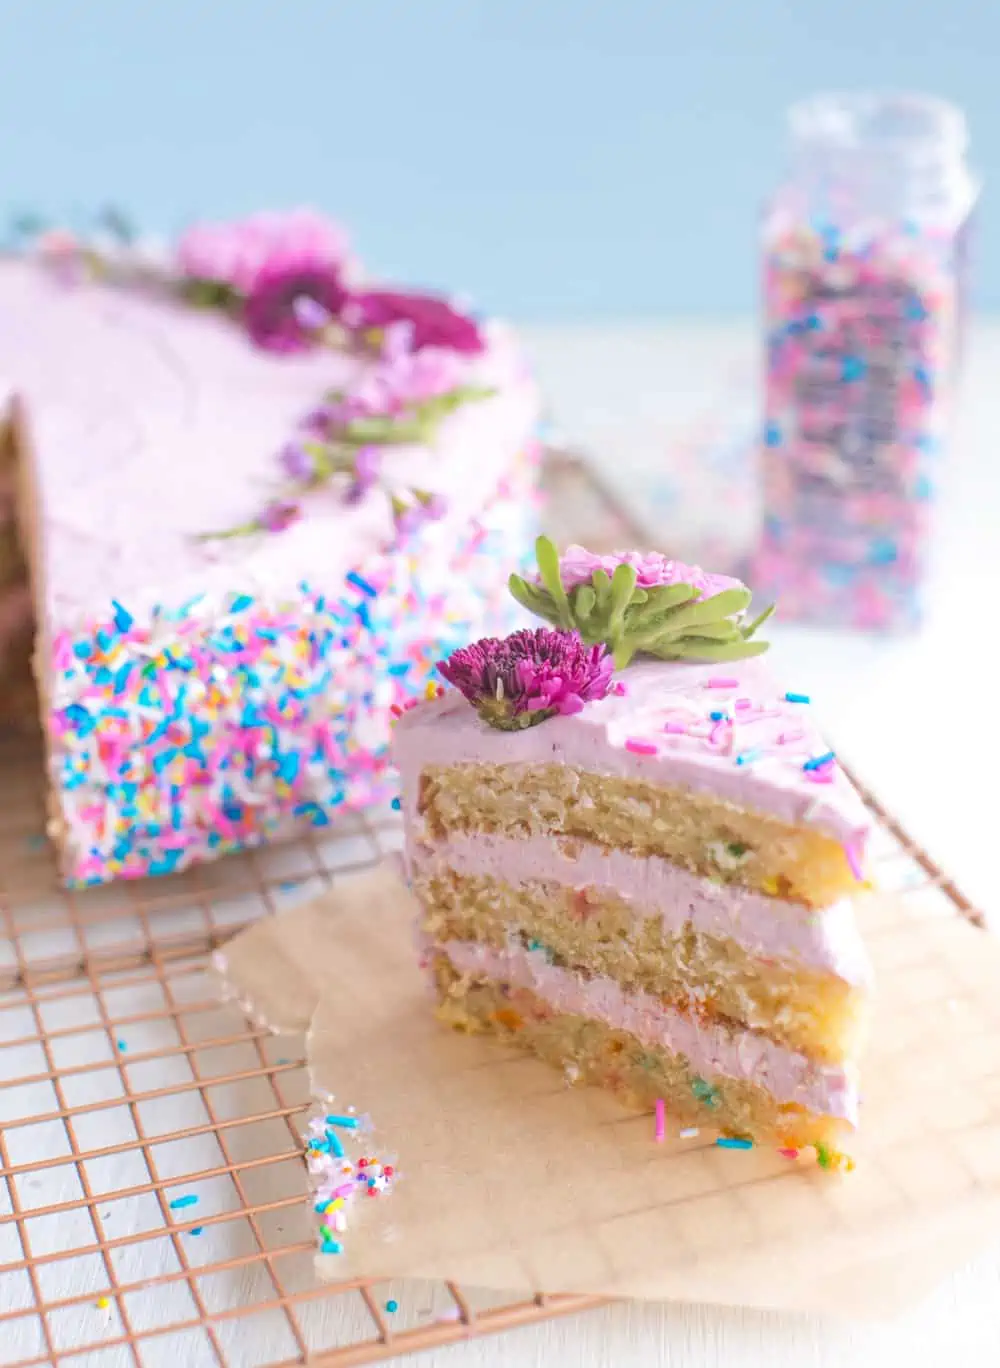 Vegan Confetti Cake With Fancy Sprinkles | WorldofVegan.com | #vegan #baking #cake #dessert #birthday #holiday #diy #food #vegetarian